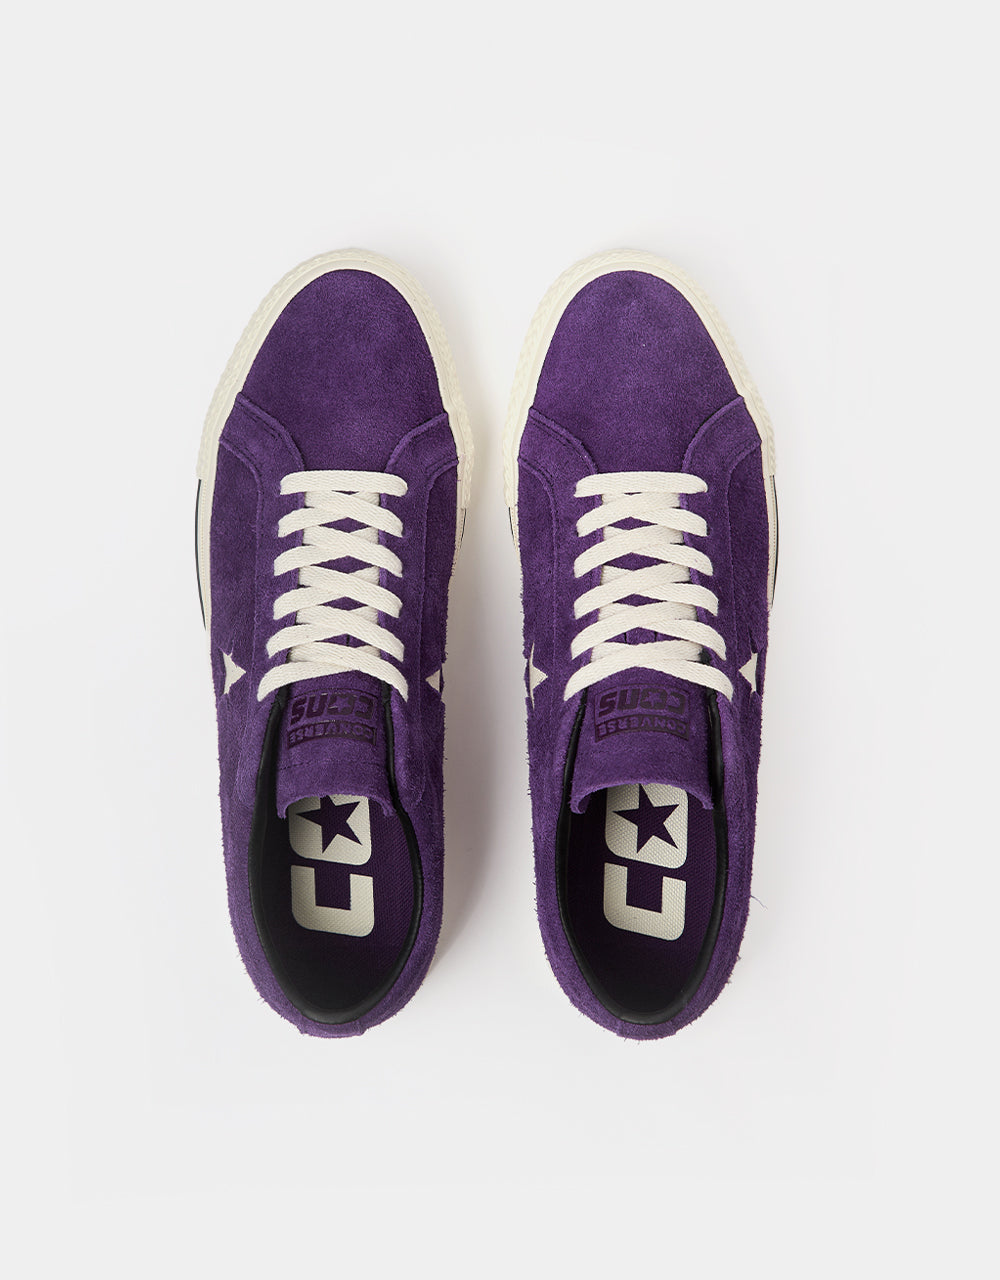 Converse One Star Pro Skate Shoes - Night Purple/Egret/Black